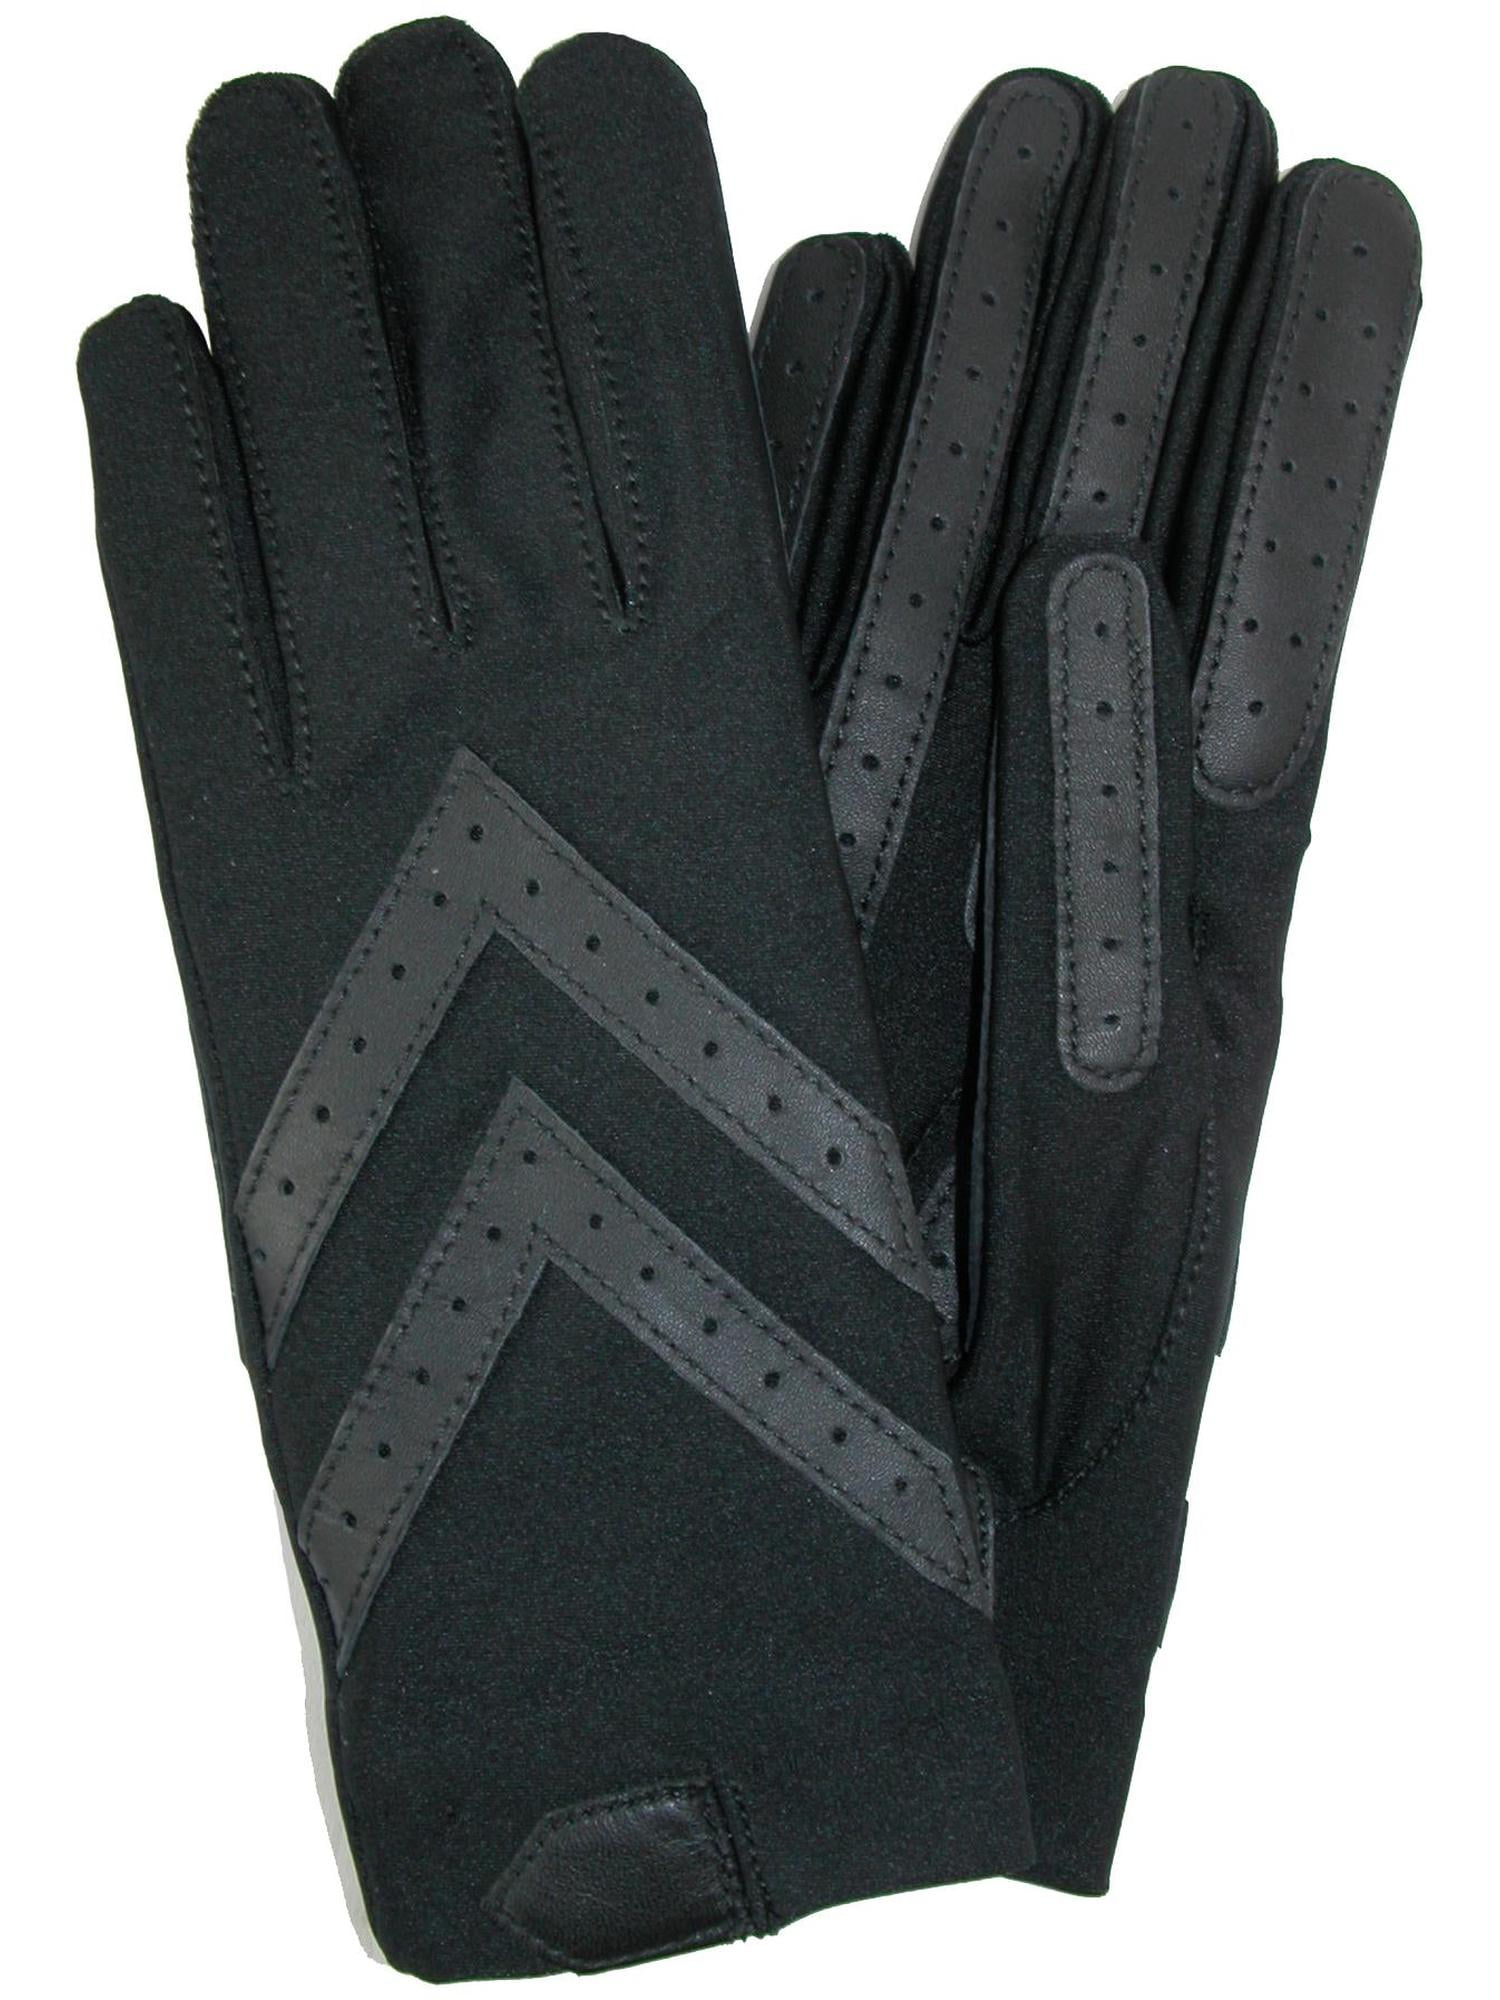 NoName gloves WOMEN FASHION Accessories Gloves discount 90% Black Single 